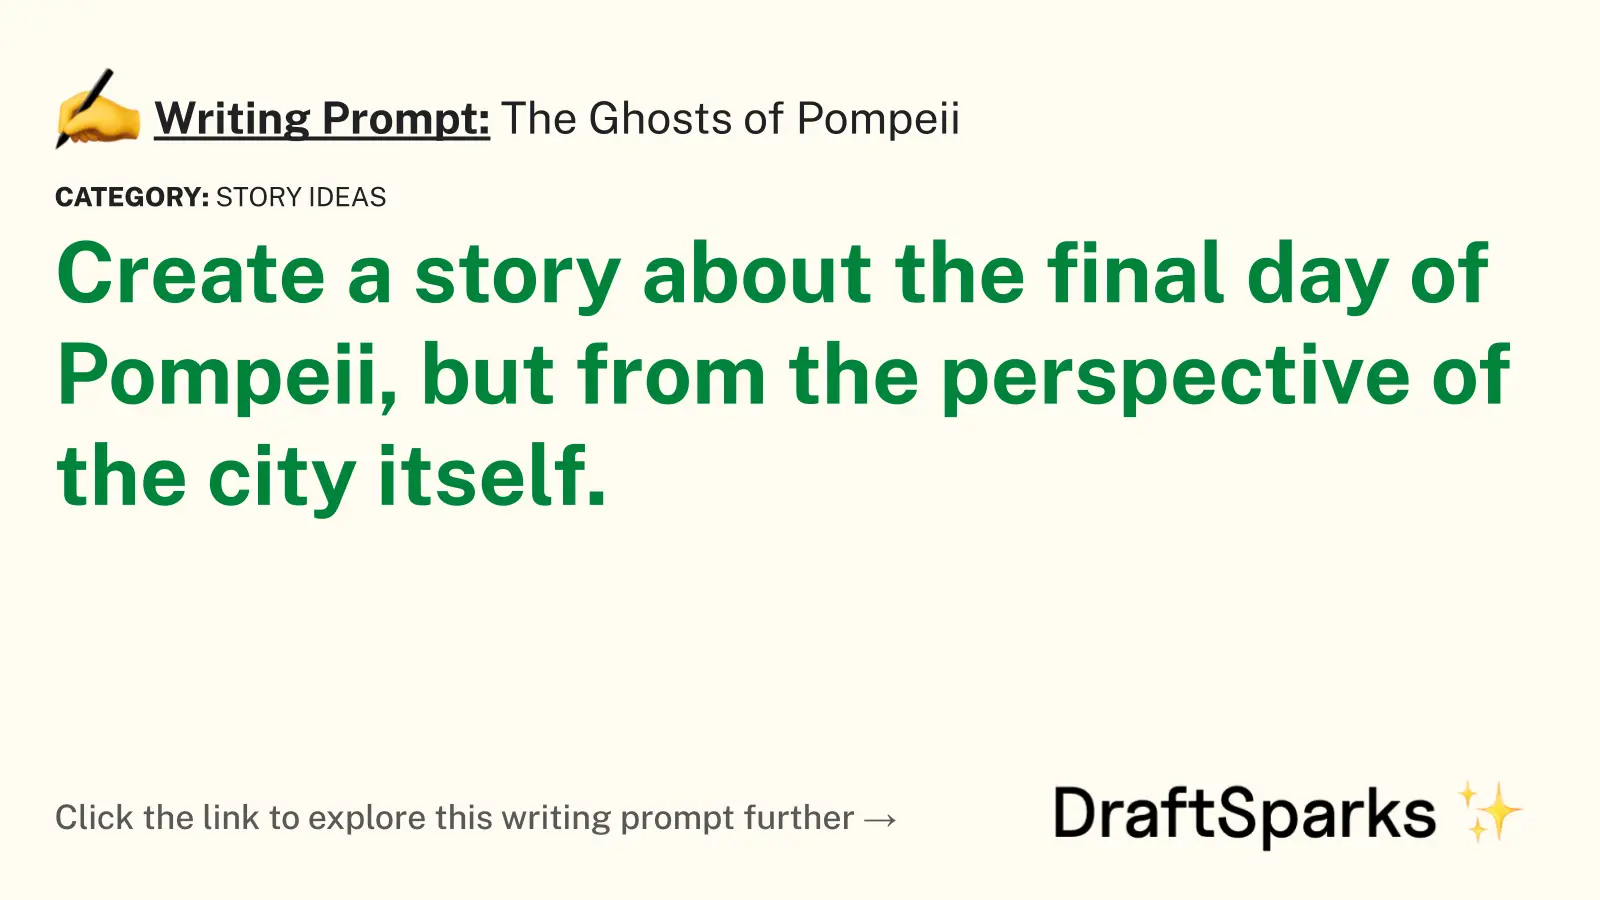 The Ghosts of Pompeii